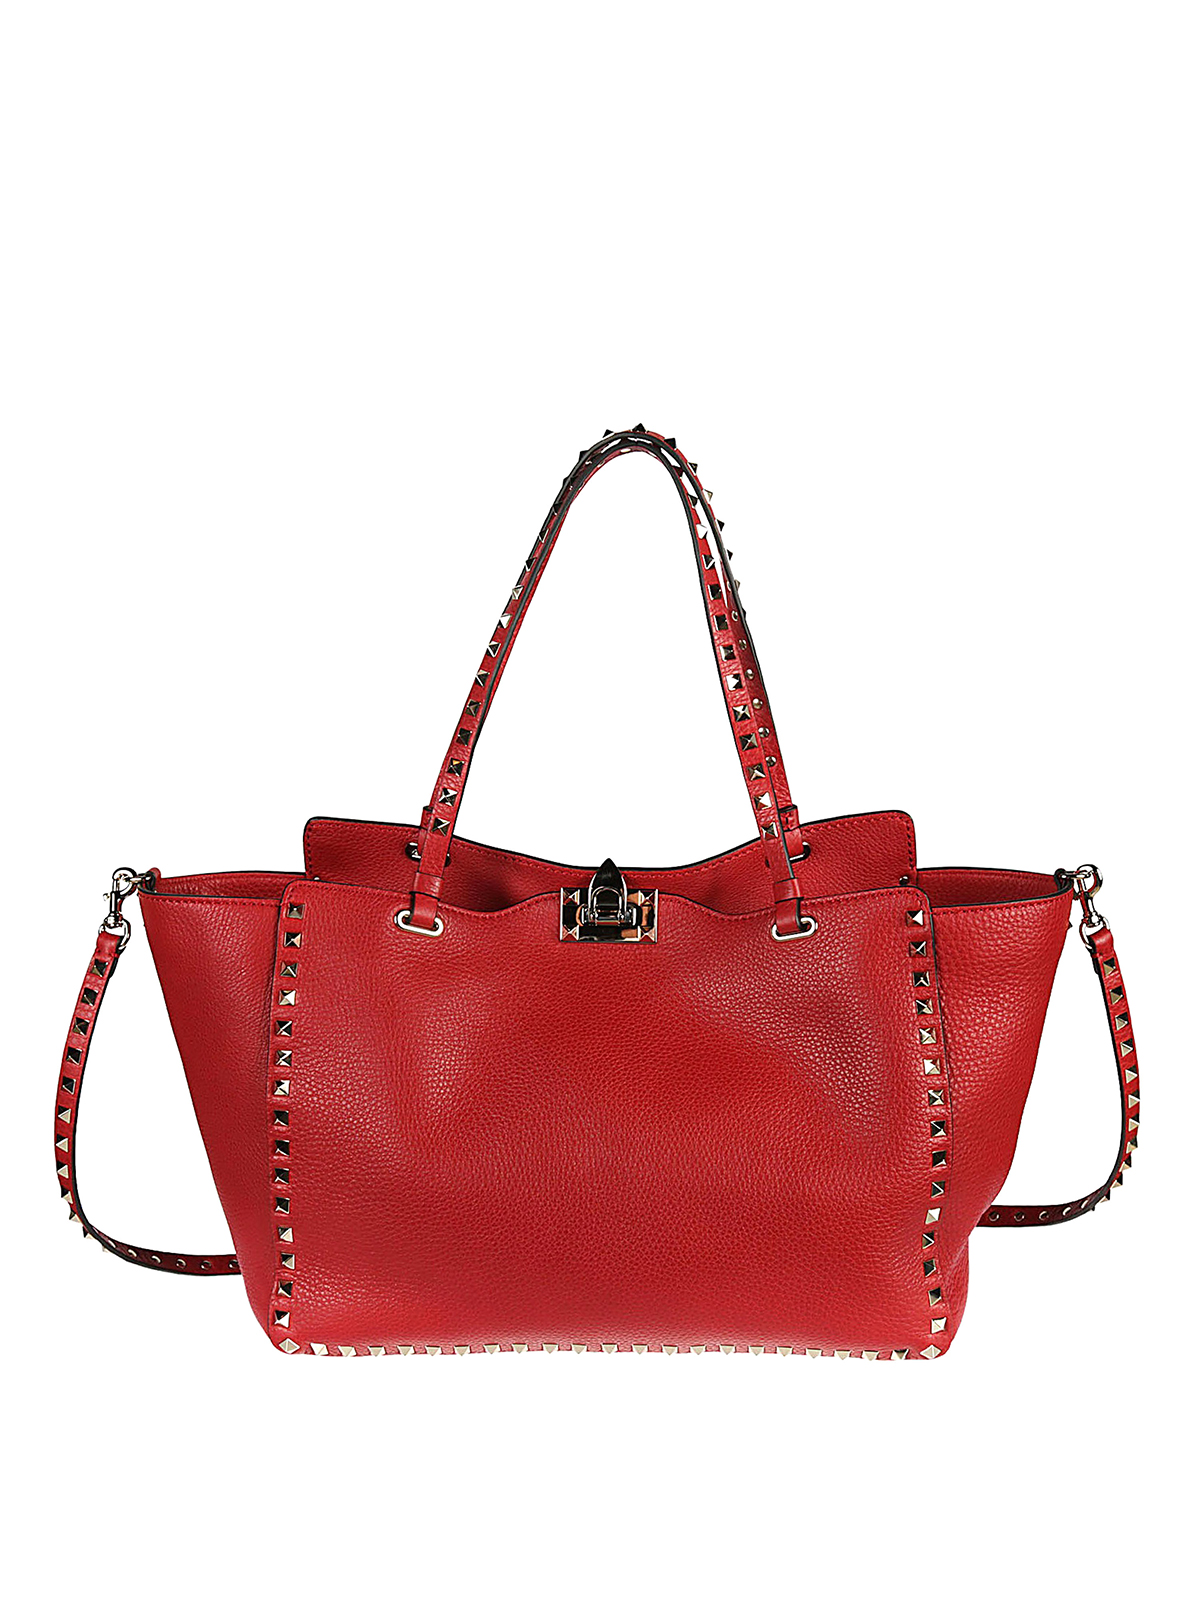 Shoulder bags Valentino Garavani - Rockstud medium red shoulder bag -  PW2B0970VSF0RO